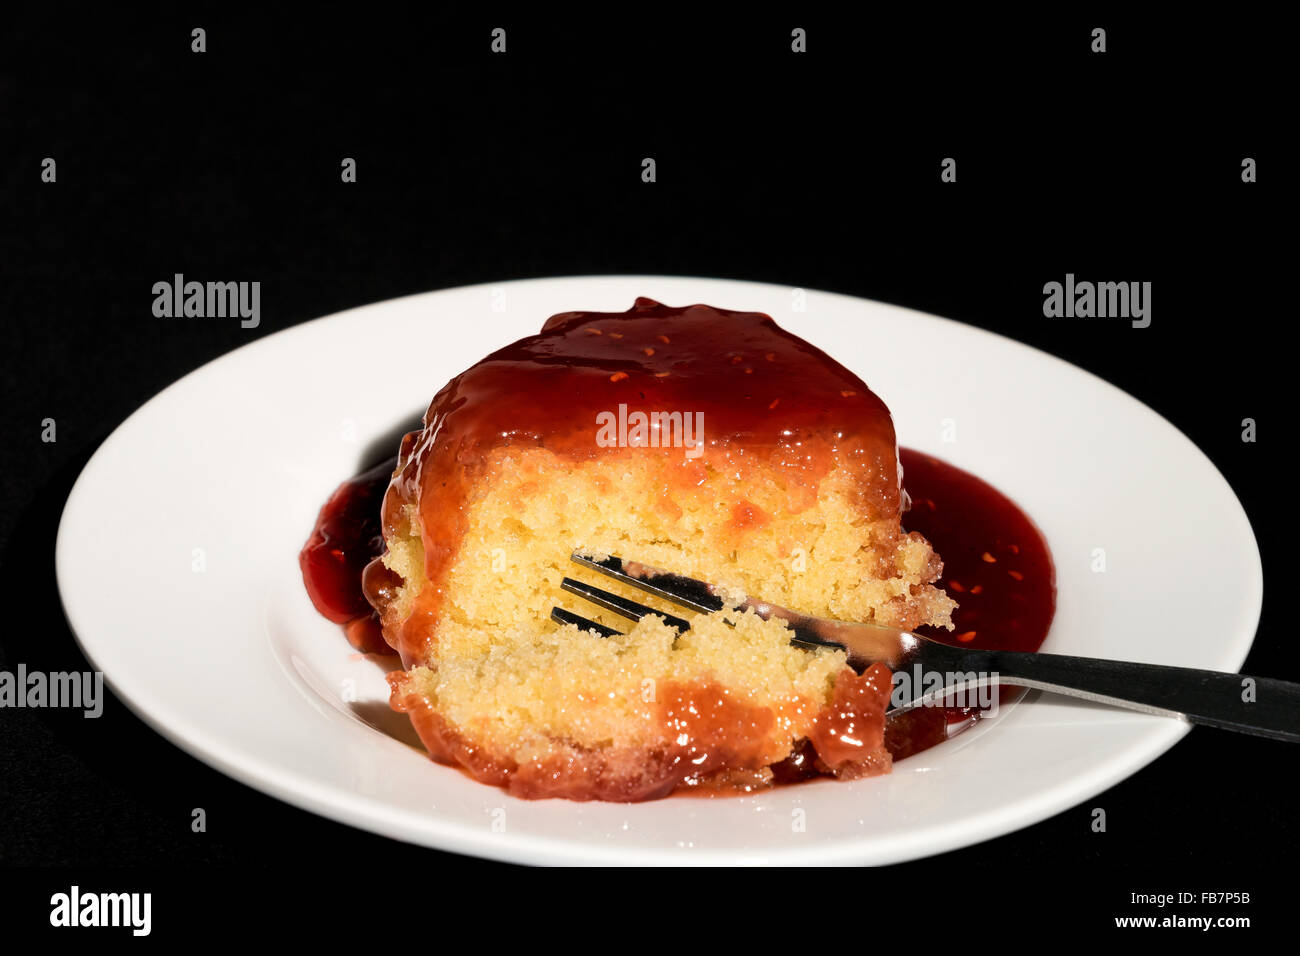 Jam sponge pudding - studio shot with a black background Stock Photo